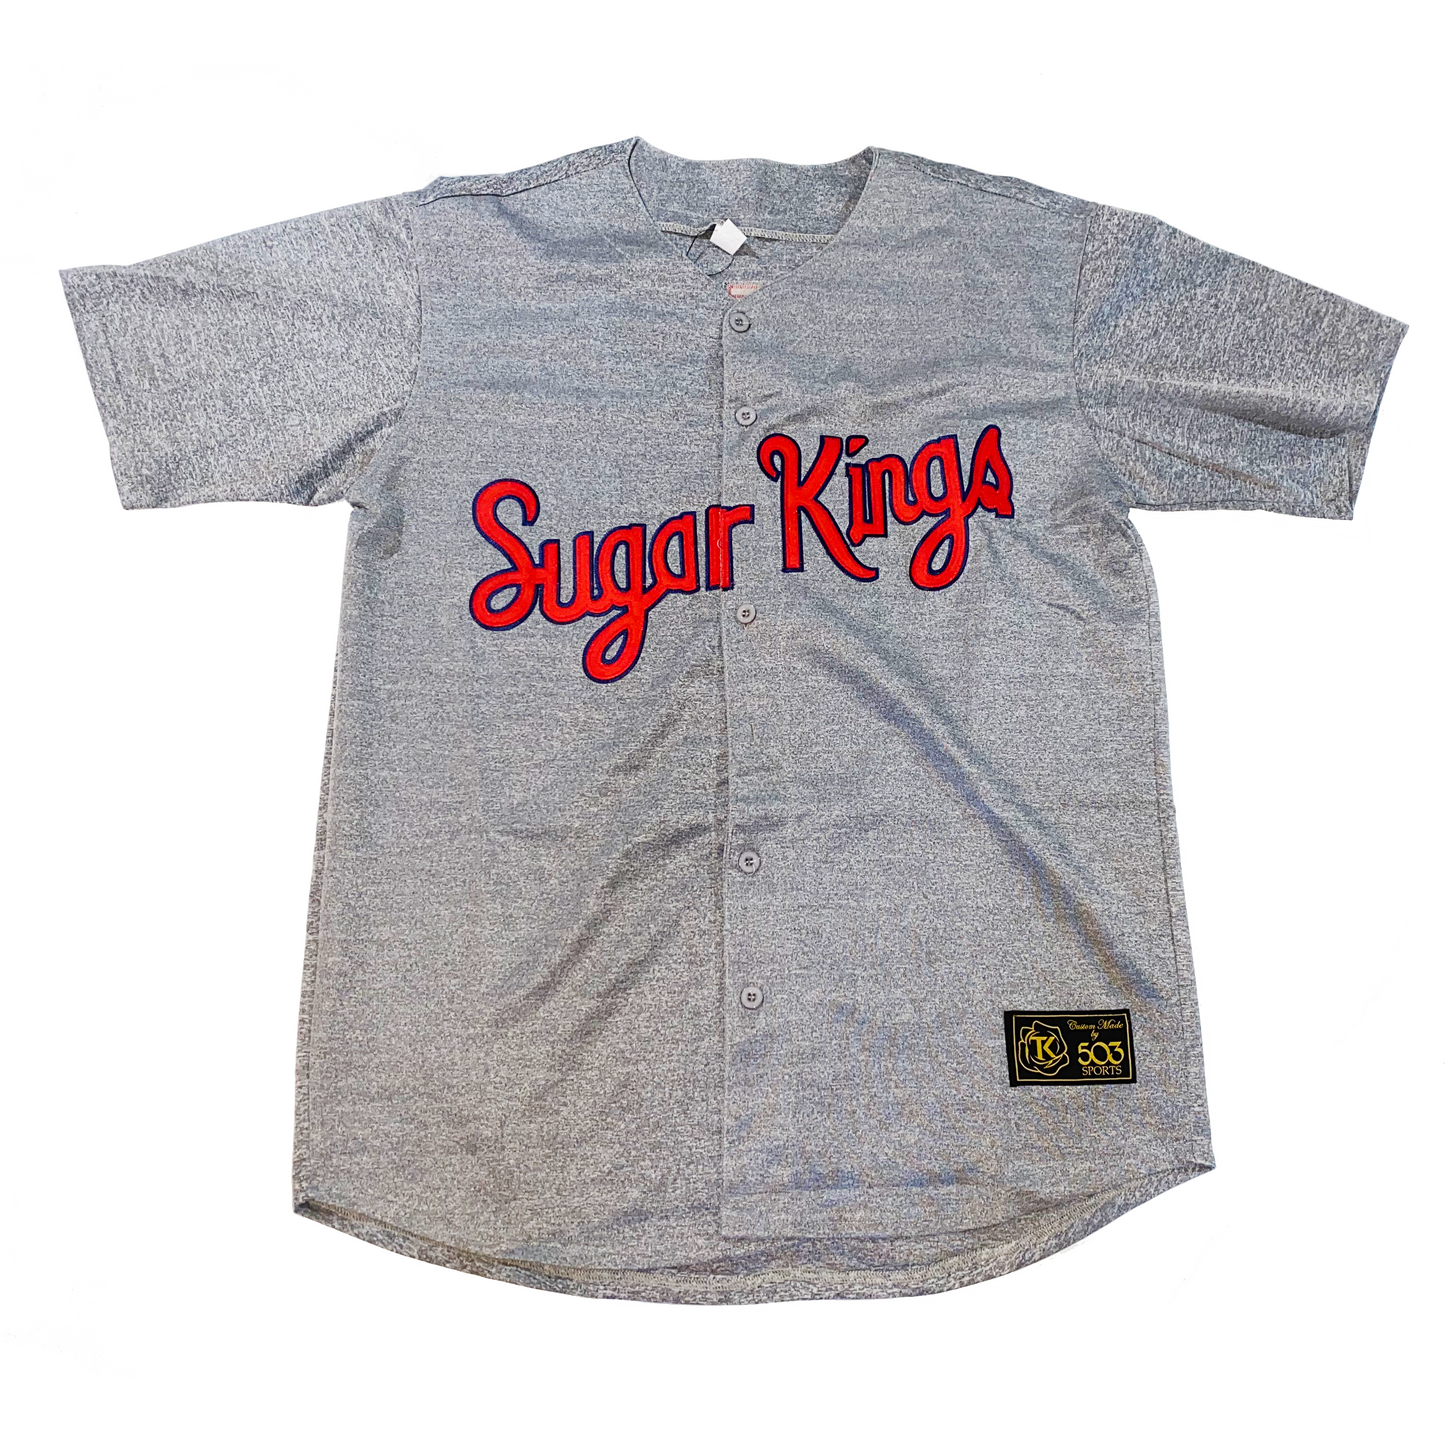 sugar kings uniforms